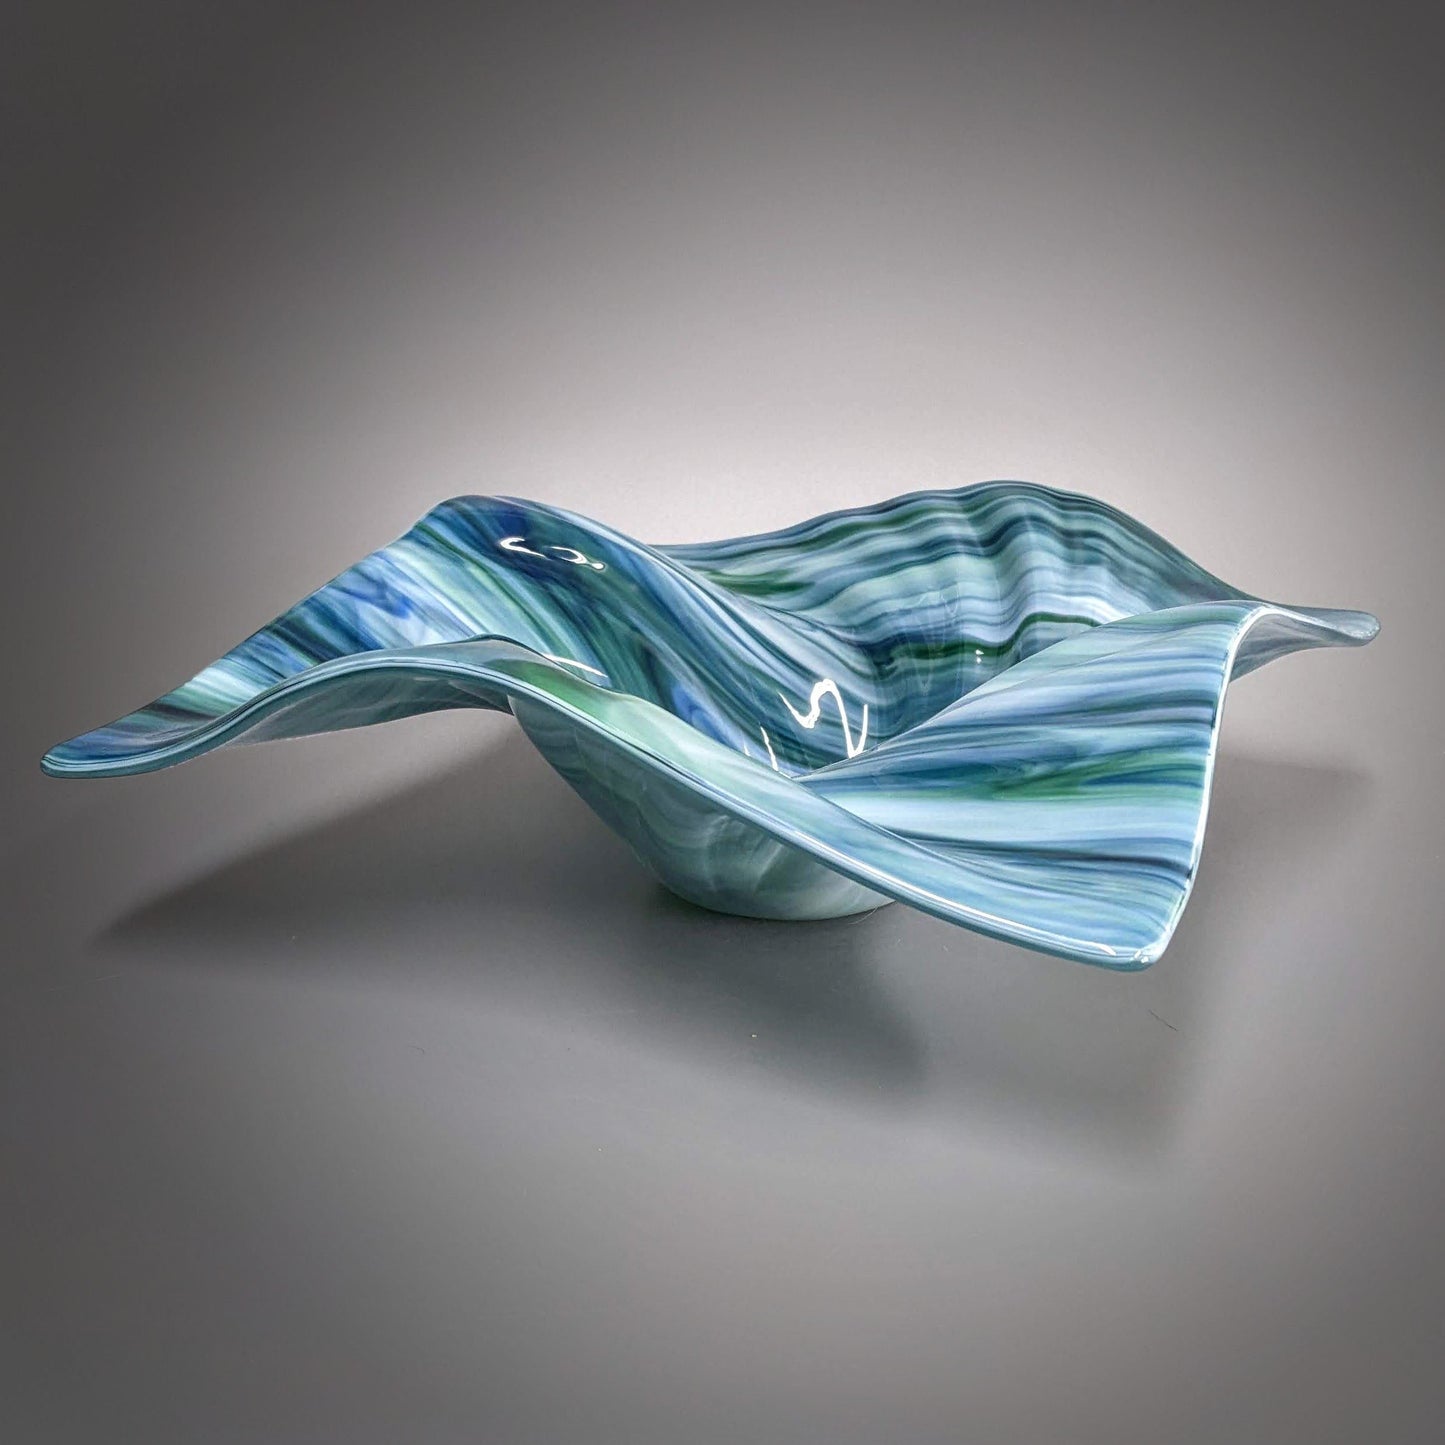 Glass Art Wave Bowl in Aqua Teal Blues and Greens